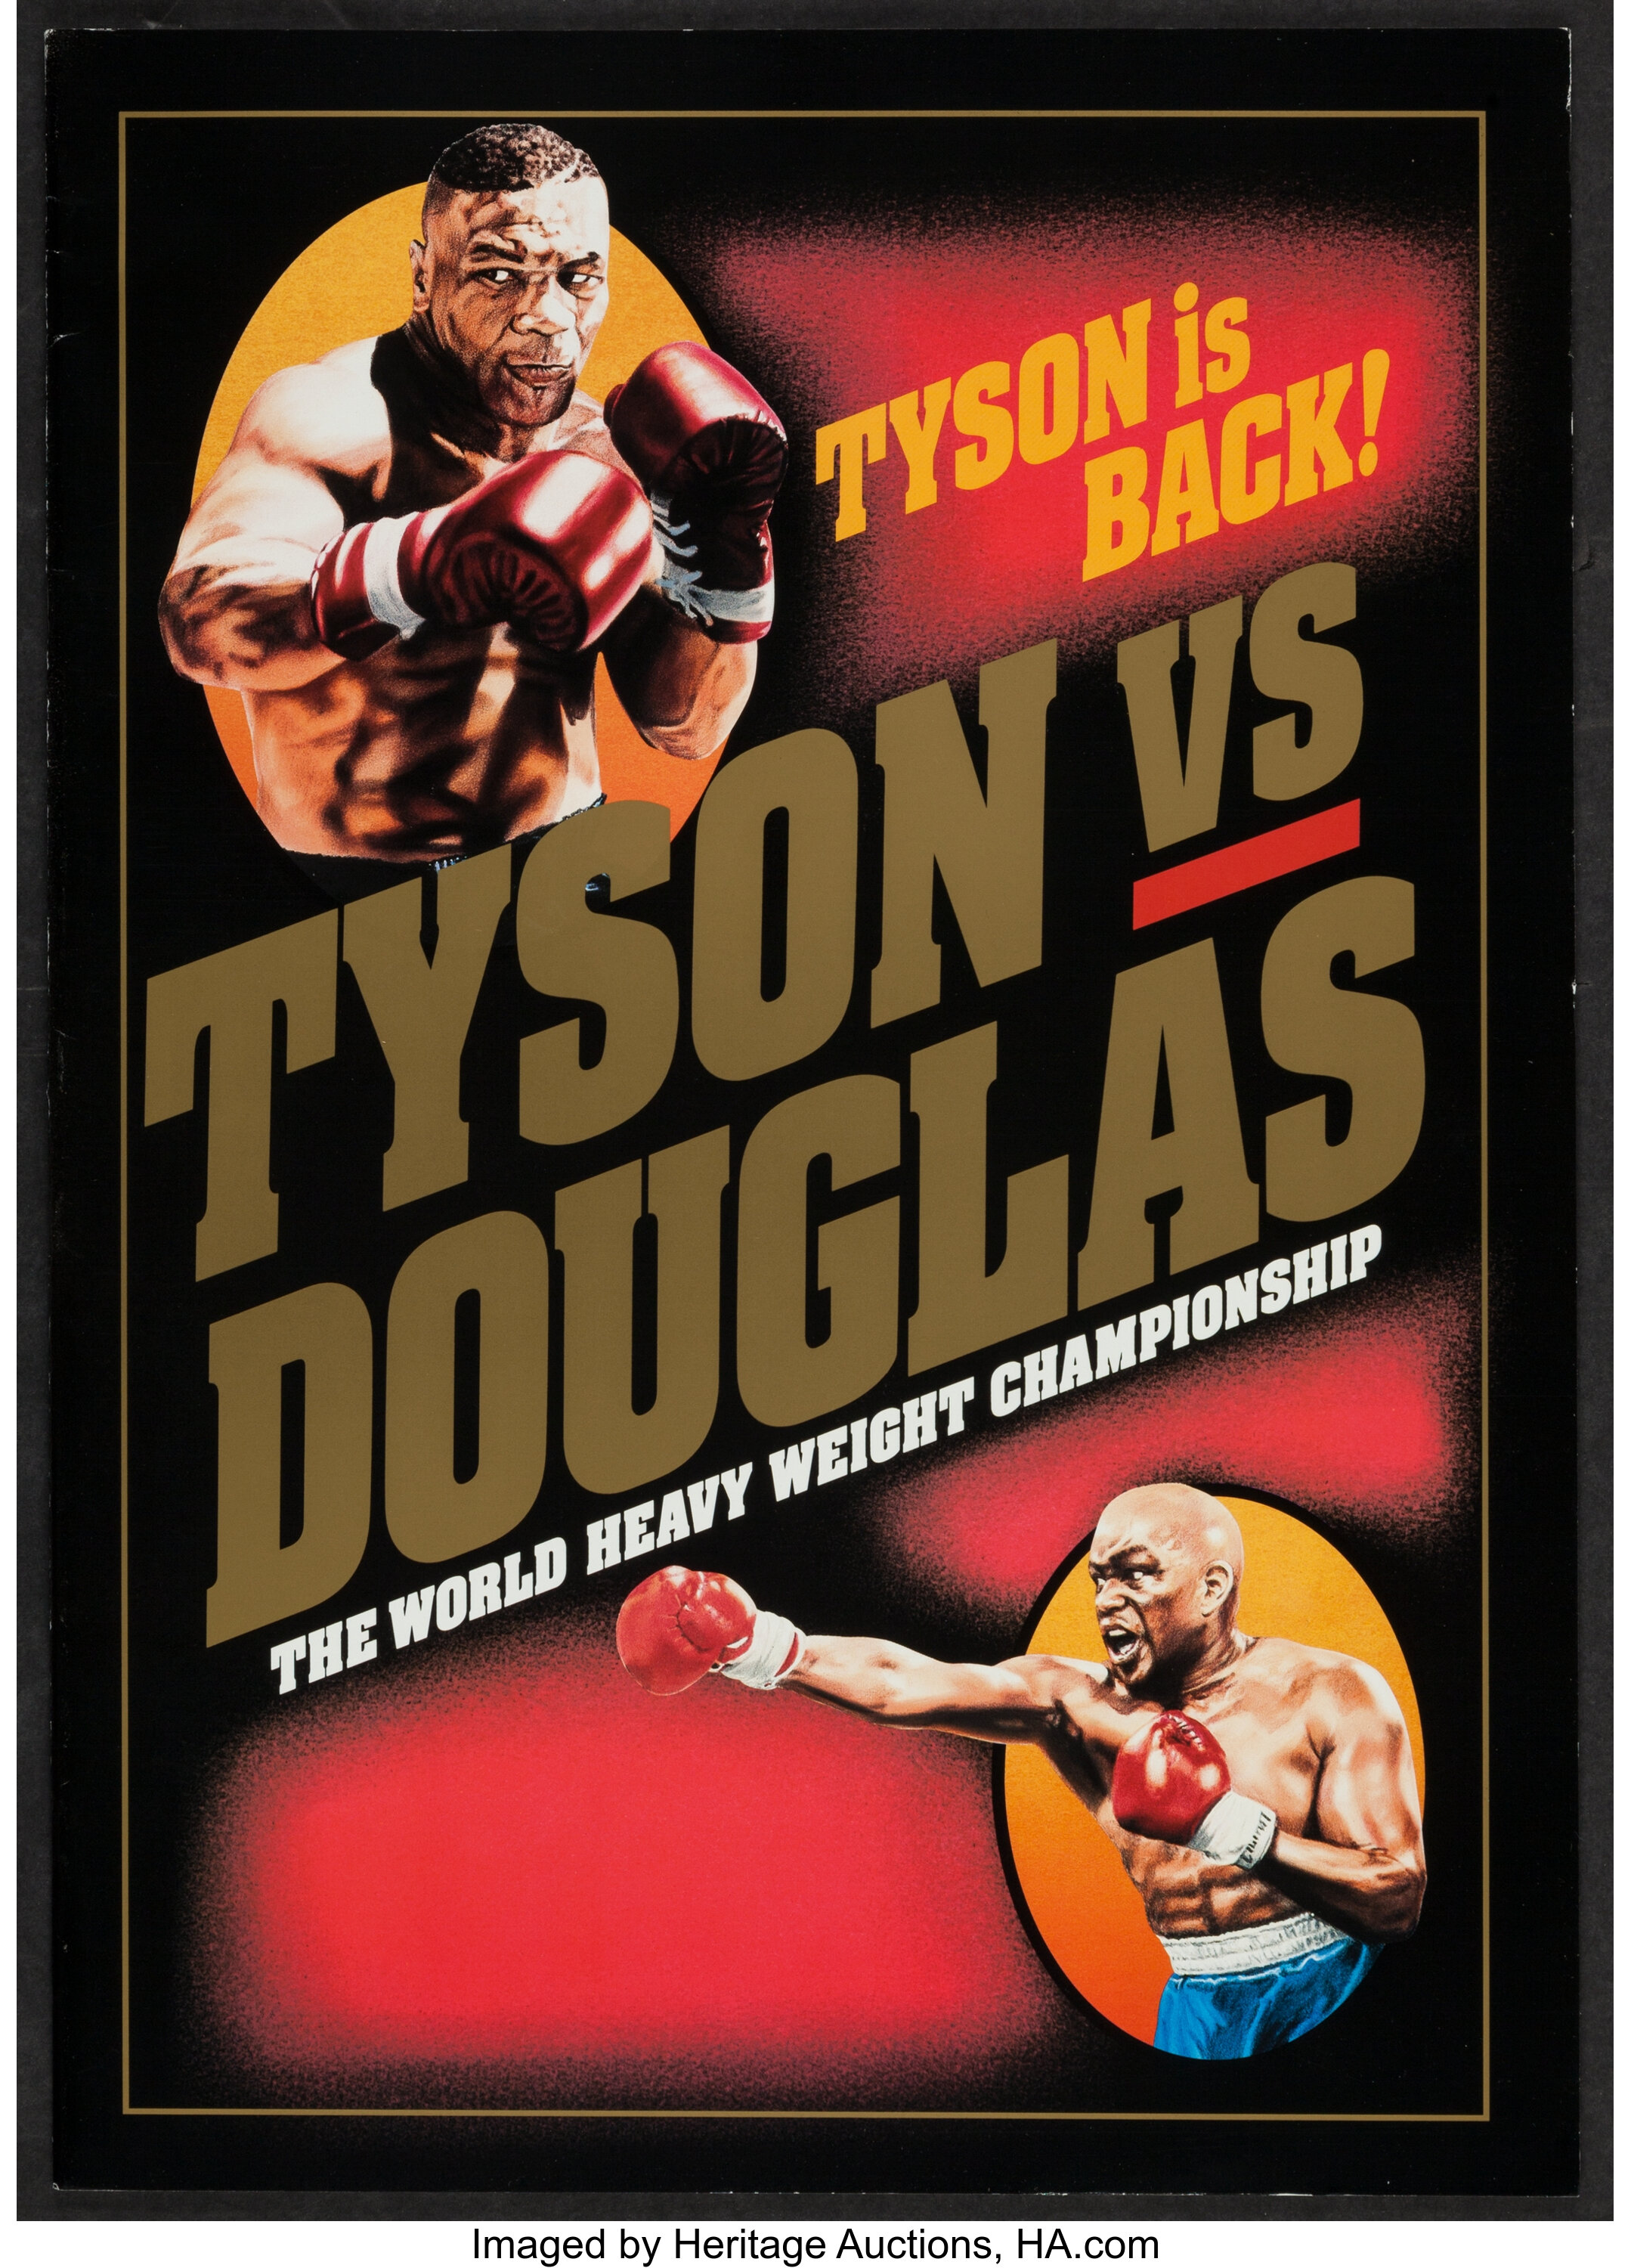 HBO Boxing Mike Tyson vs James Douglas (TV Episode 1990) - IMDb